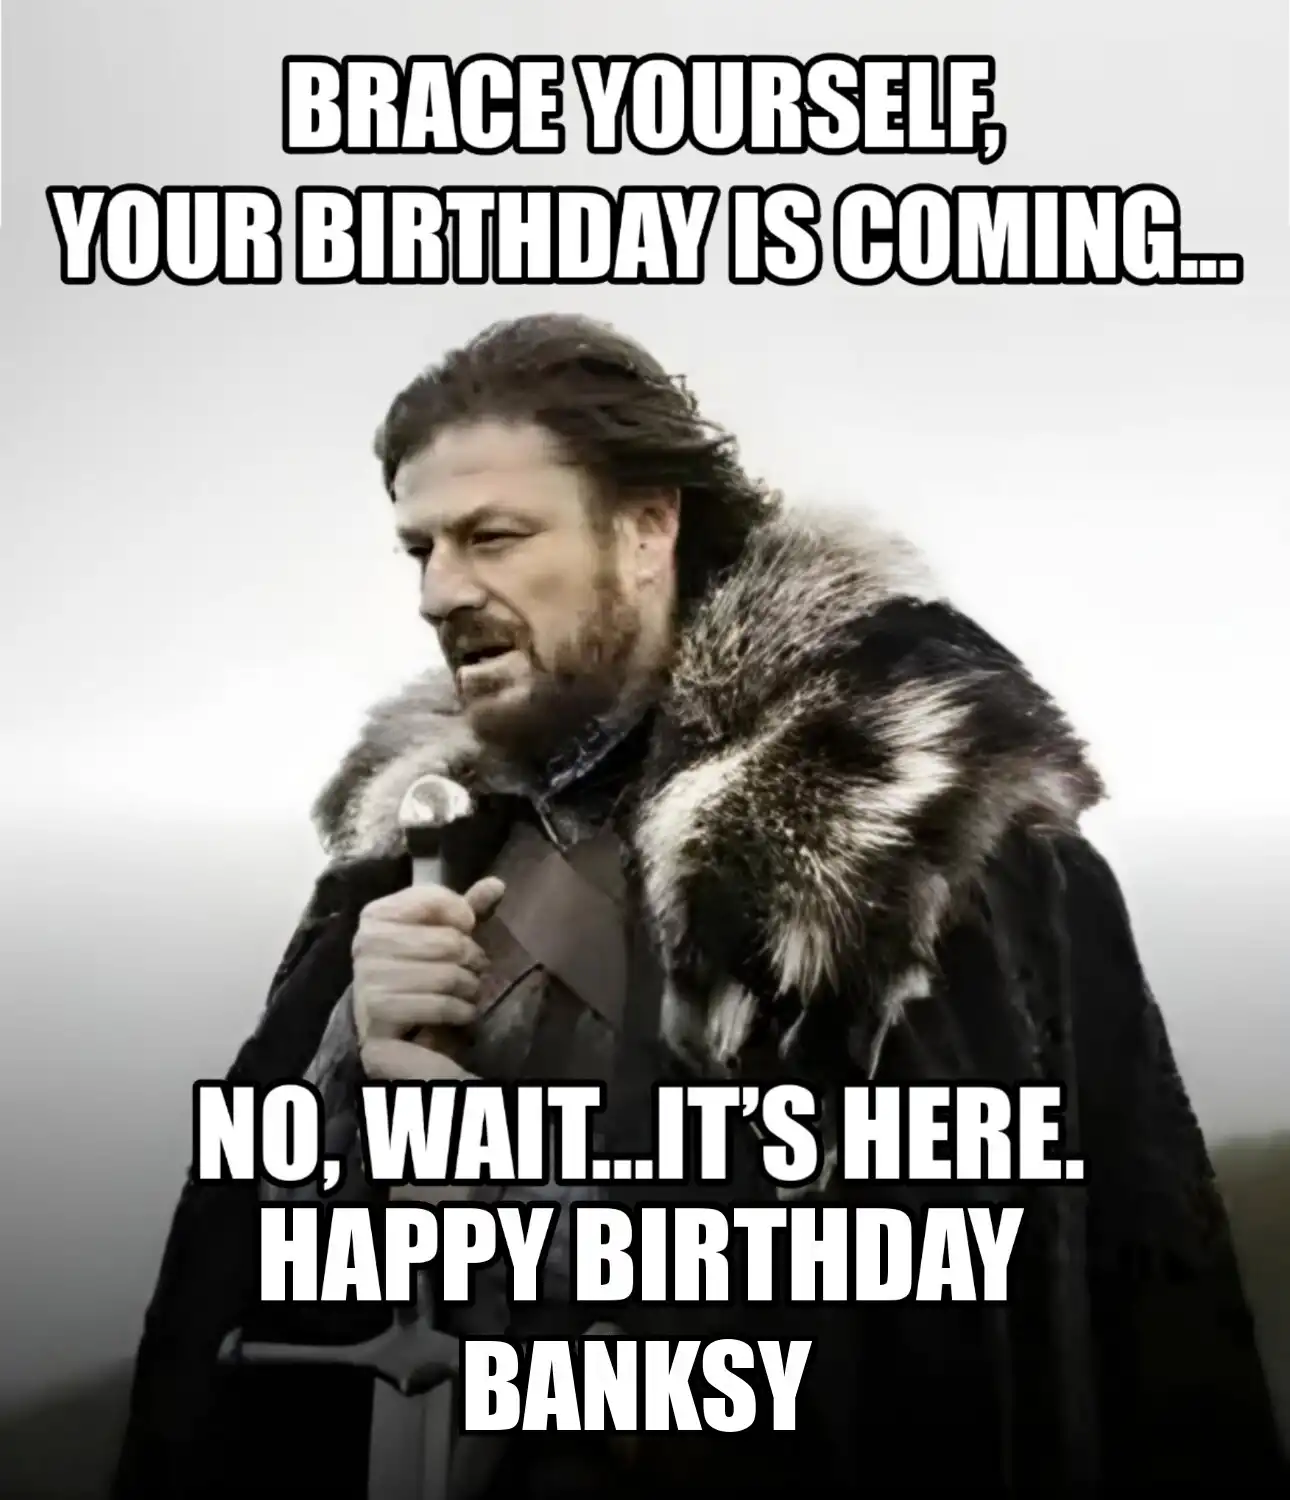 Happy Birthday Banksy Brace Yourself Your Birthday Is Coming Meme